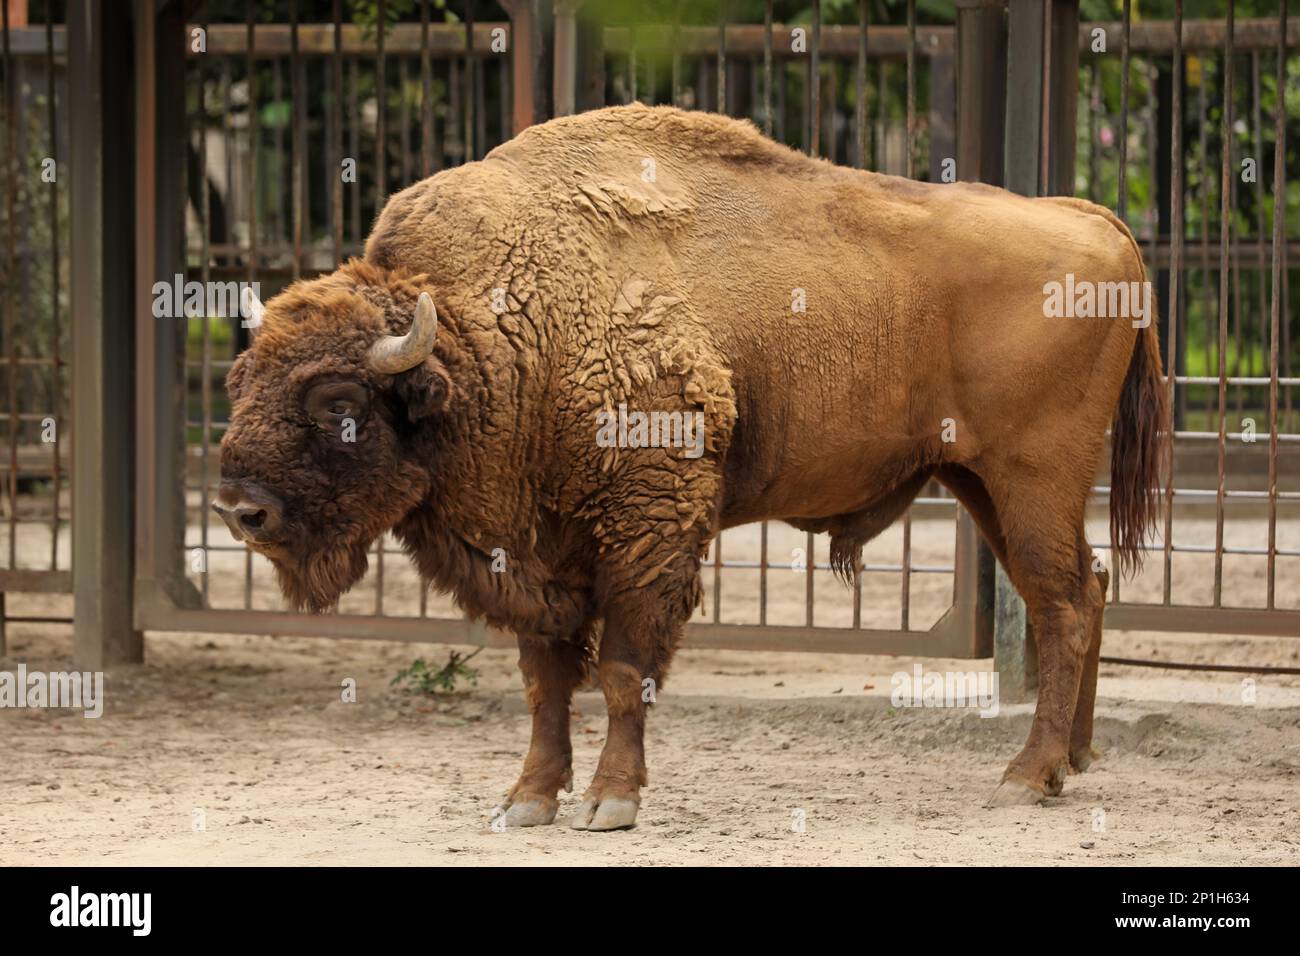 American bison in zoo enclosure. Wild animal Stock Photo